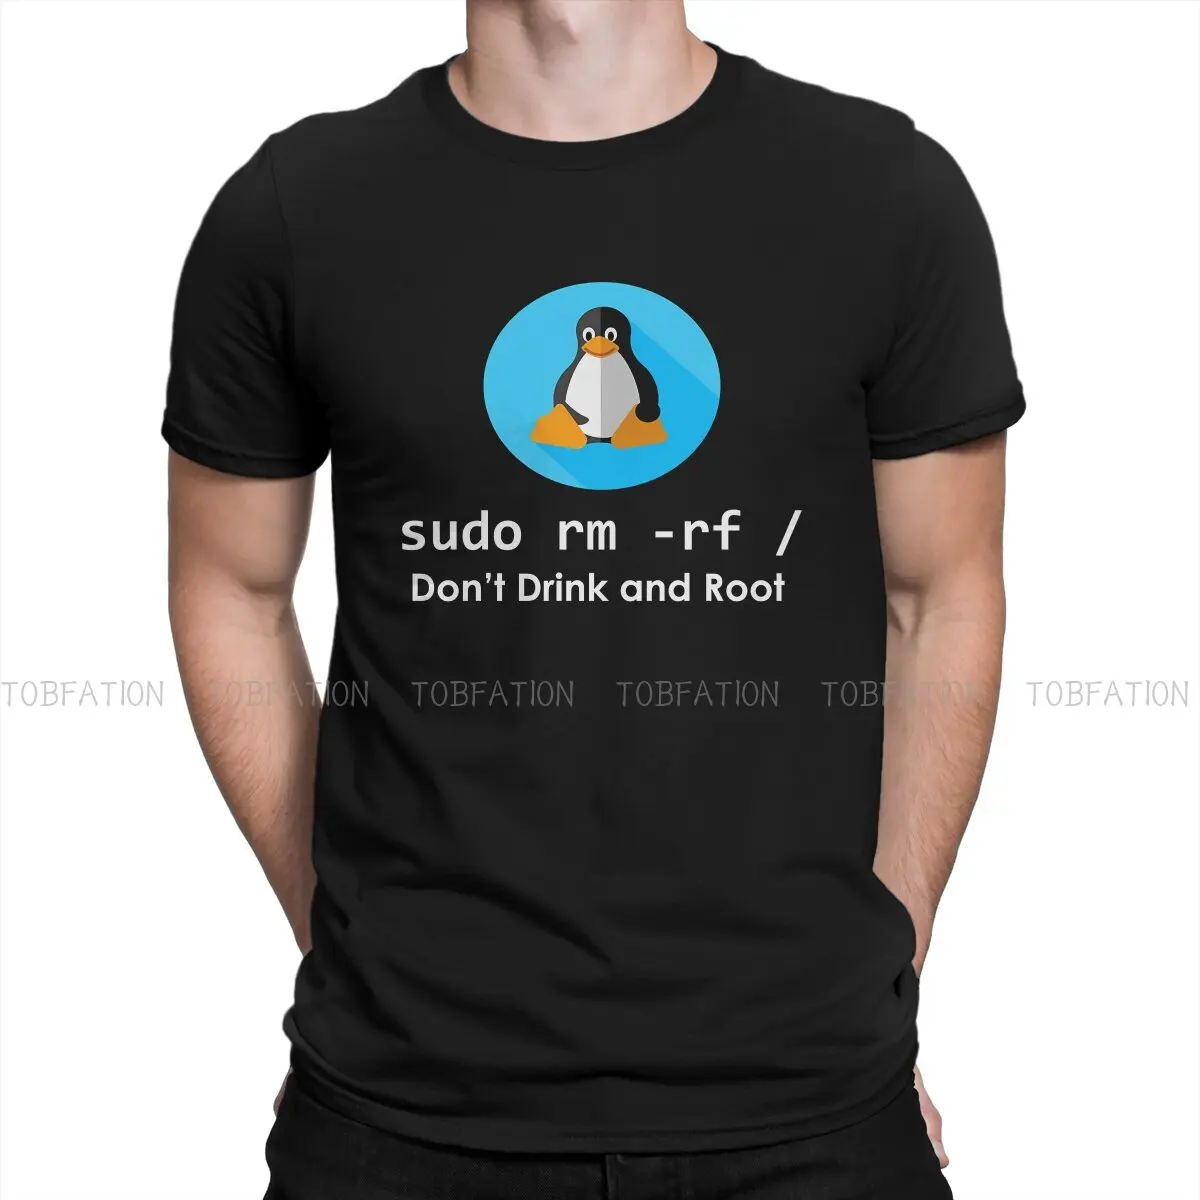 

Sudo RM RF TShirt For Men Linux Operating System Clothing Fashion T Shirt Comfortable Printed Fluffy Creative Gift